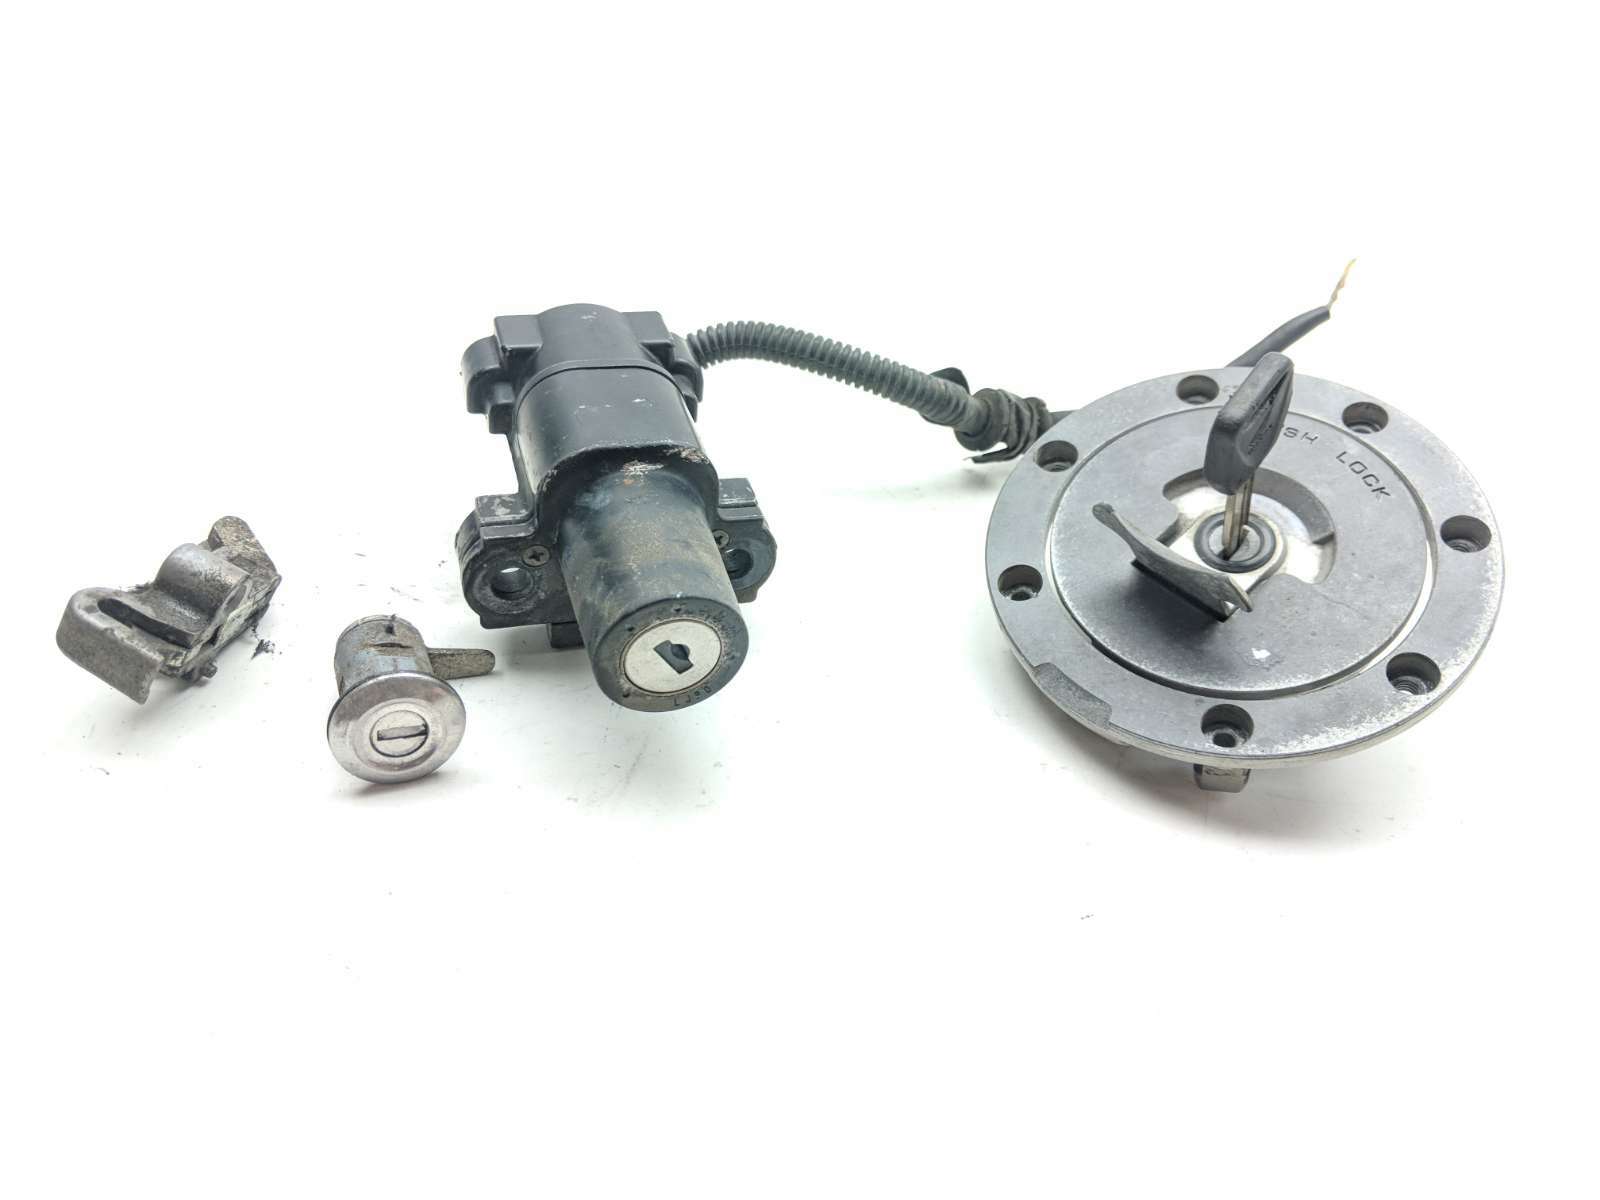 07 Honda CBR 600 CBR600RR Lock Set Ignition Switch Cap And Key